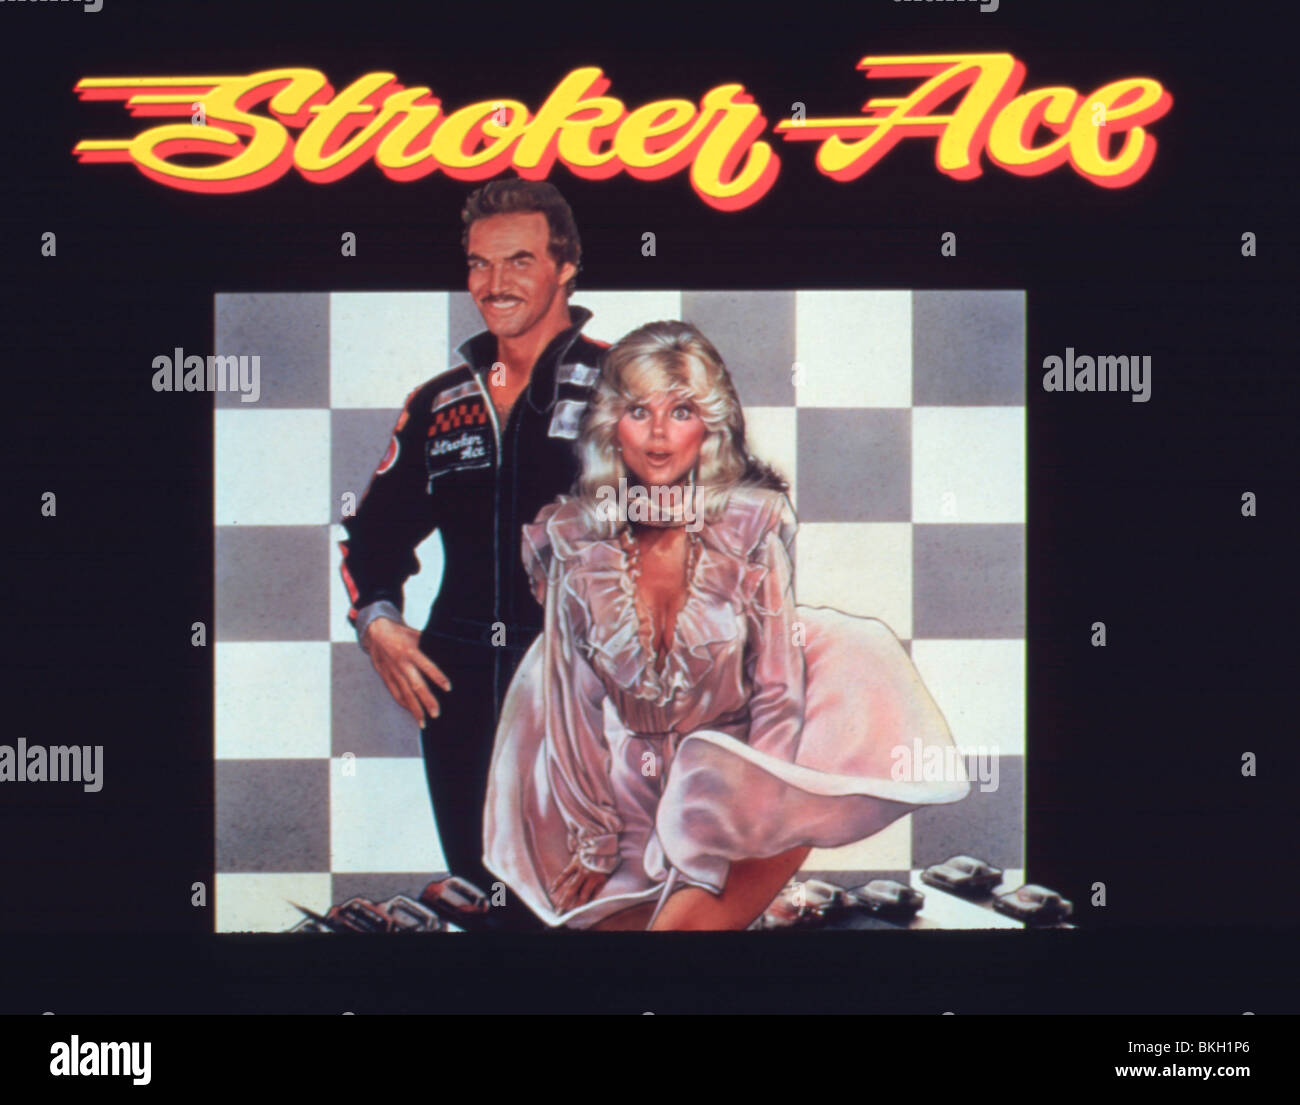 STROKER ACE POSTER -1983 Foto Stock